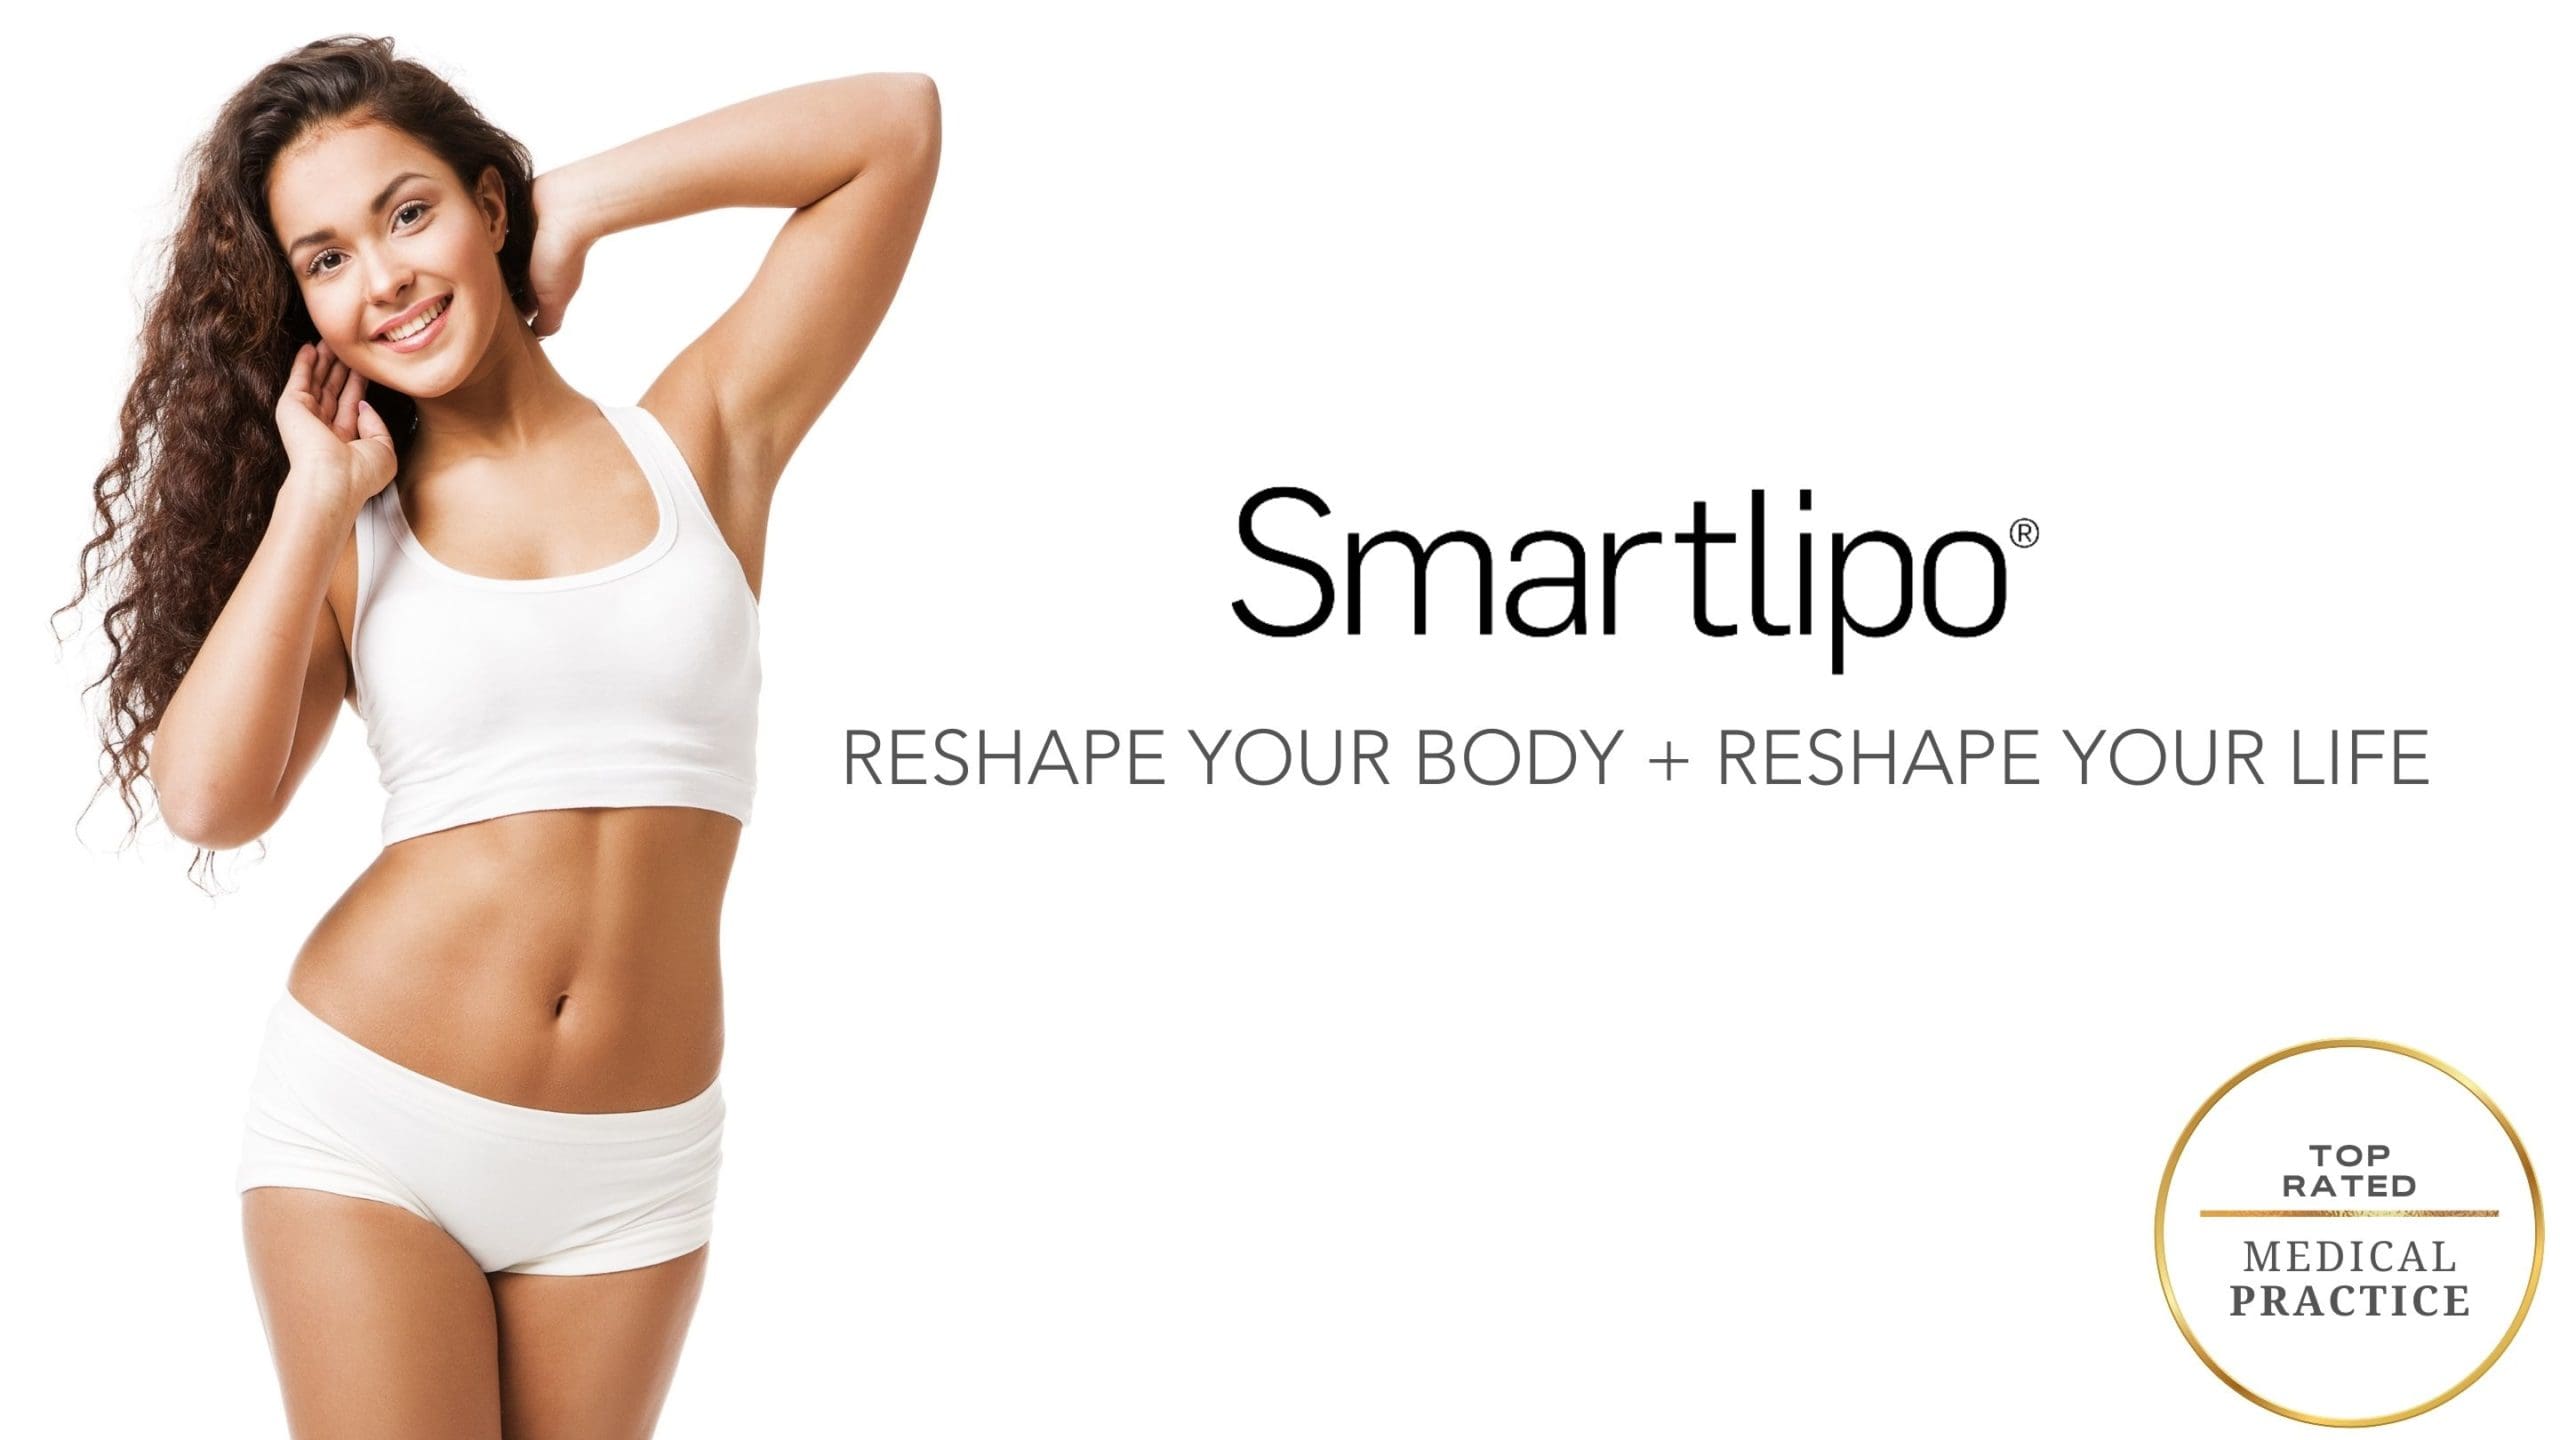 fitness woman smiling promoting Smart Lipo Treatment